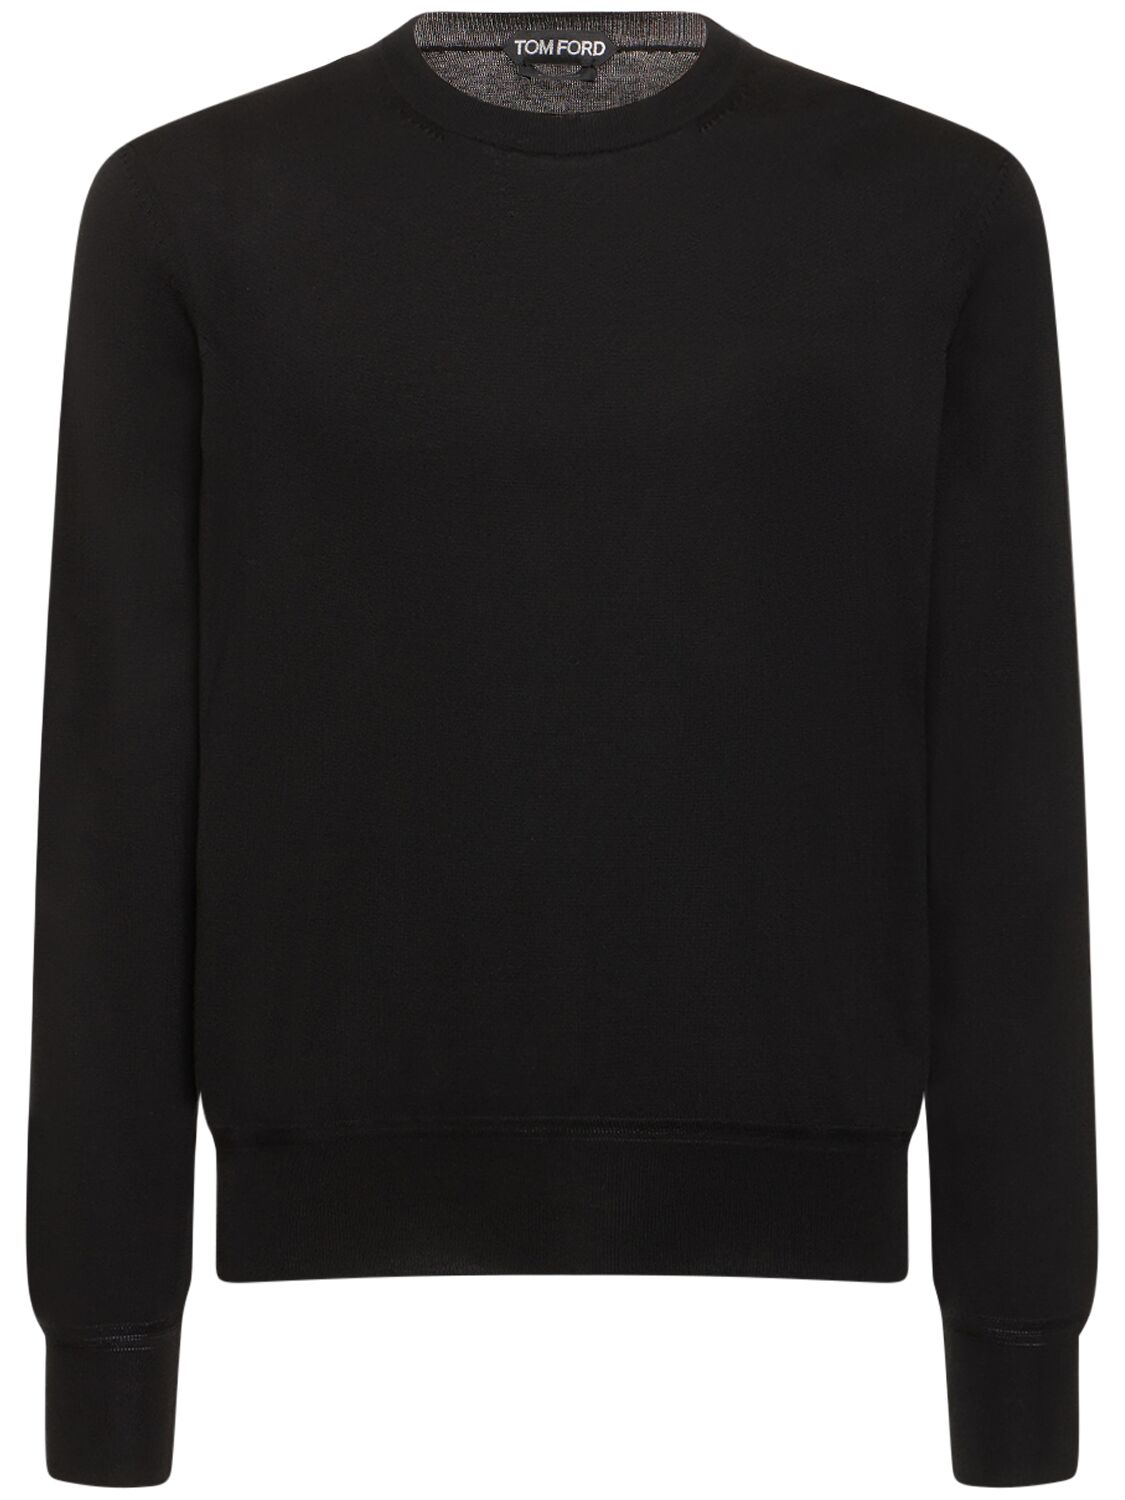 Tom Ford Superfine Cotton Crewneck Sweater In Black